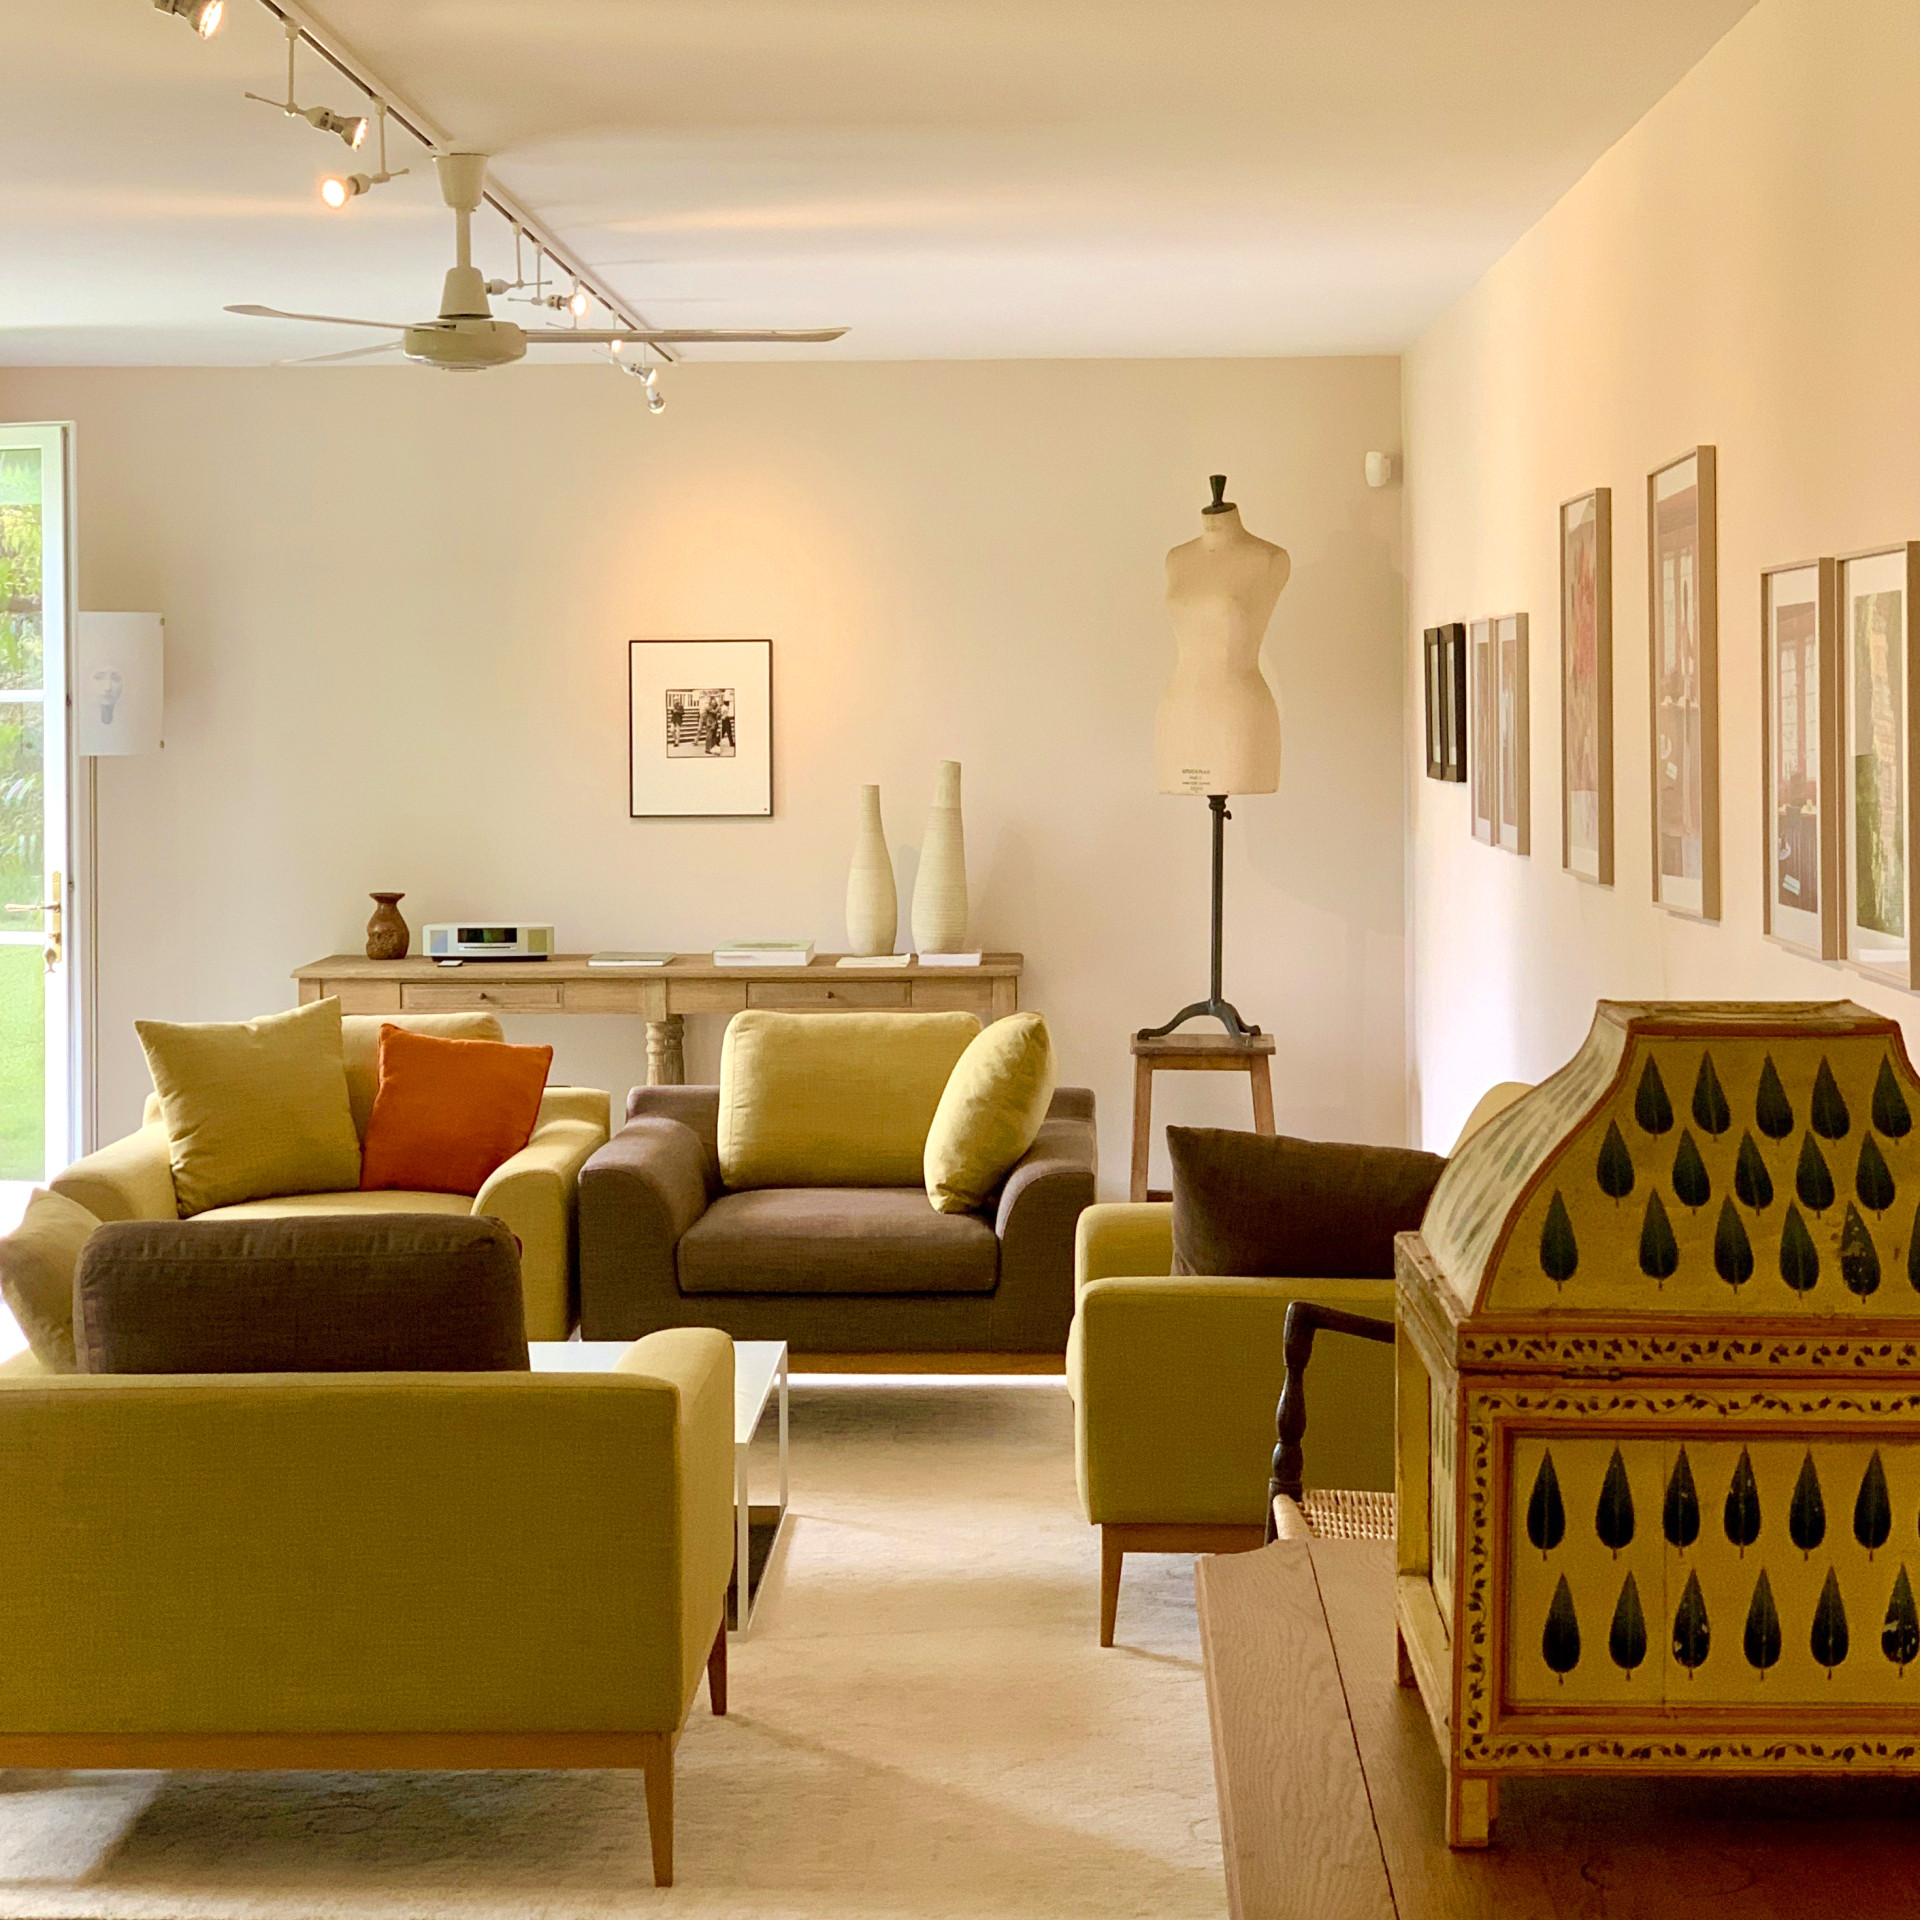 Le Pavillon de Galon - A lounge transforming its atmosphere through the seasons of Provence